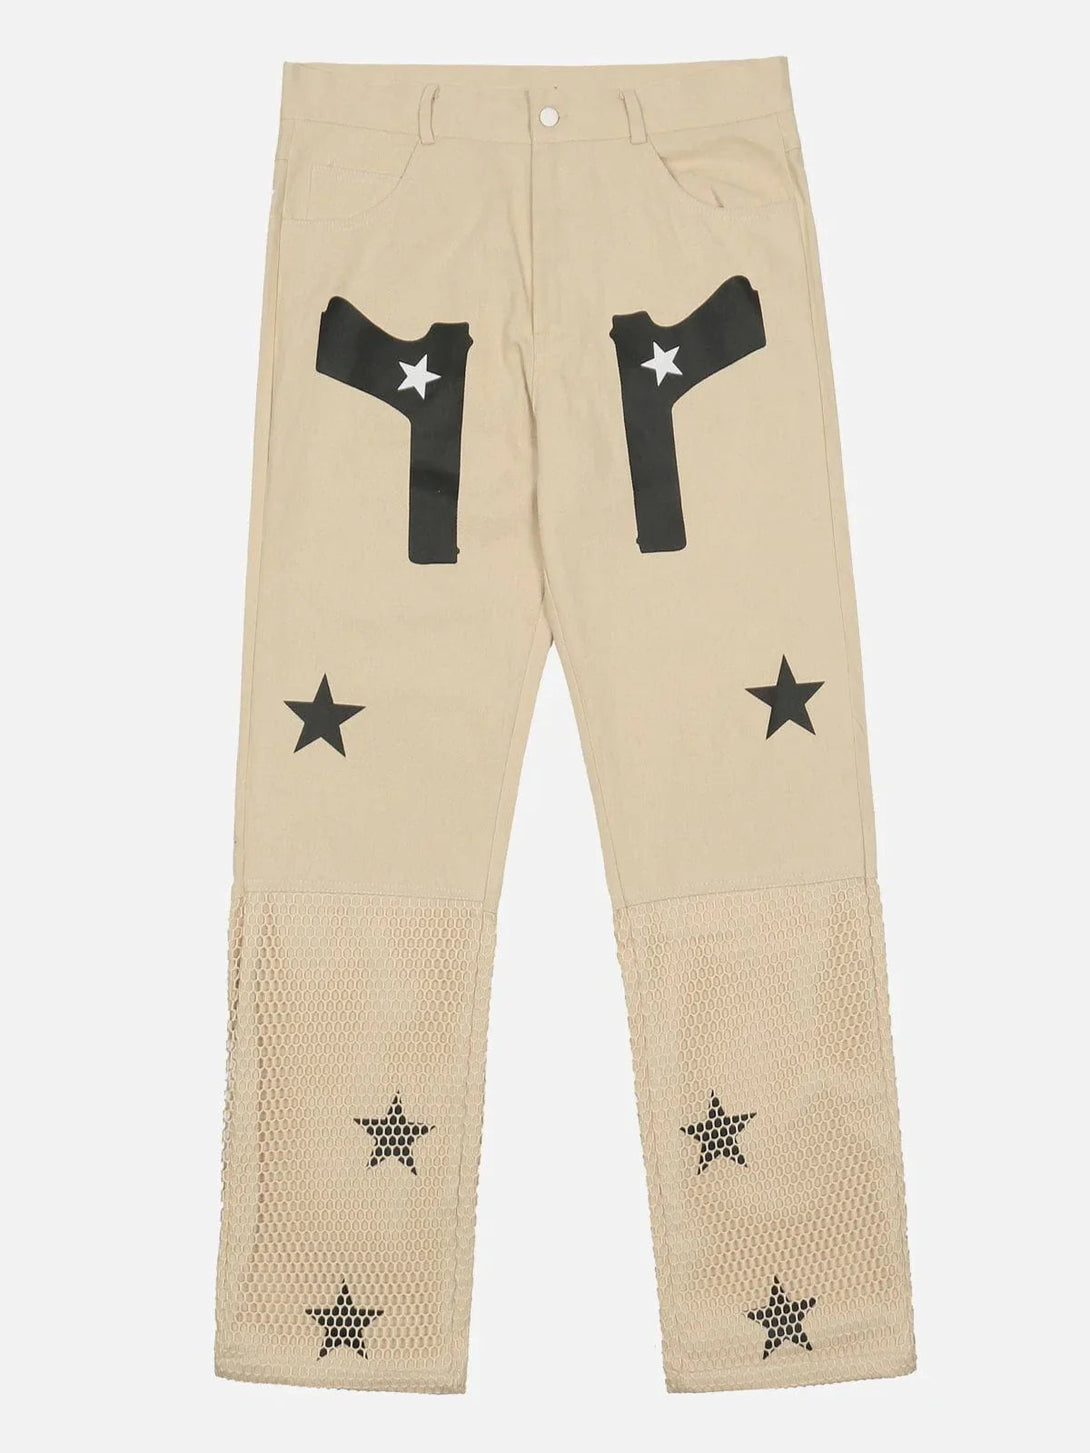 Majesda® - Street Pistol Star Print Pants outfit ideas streetwear fashion